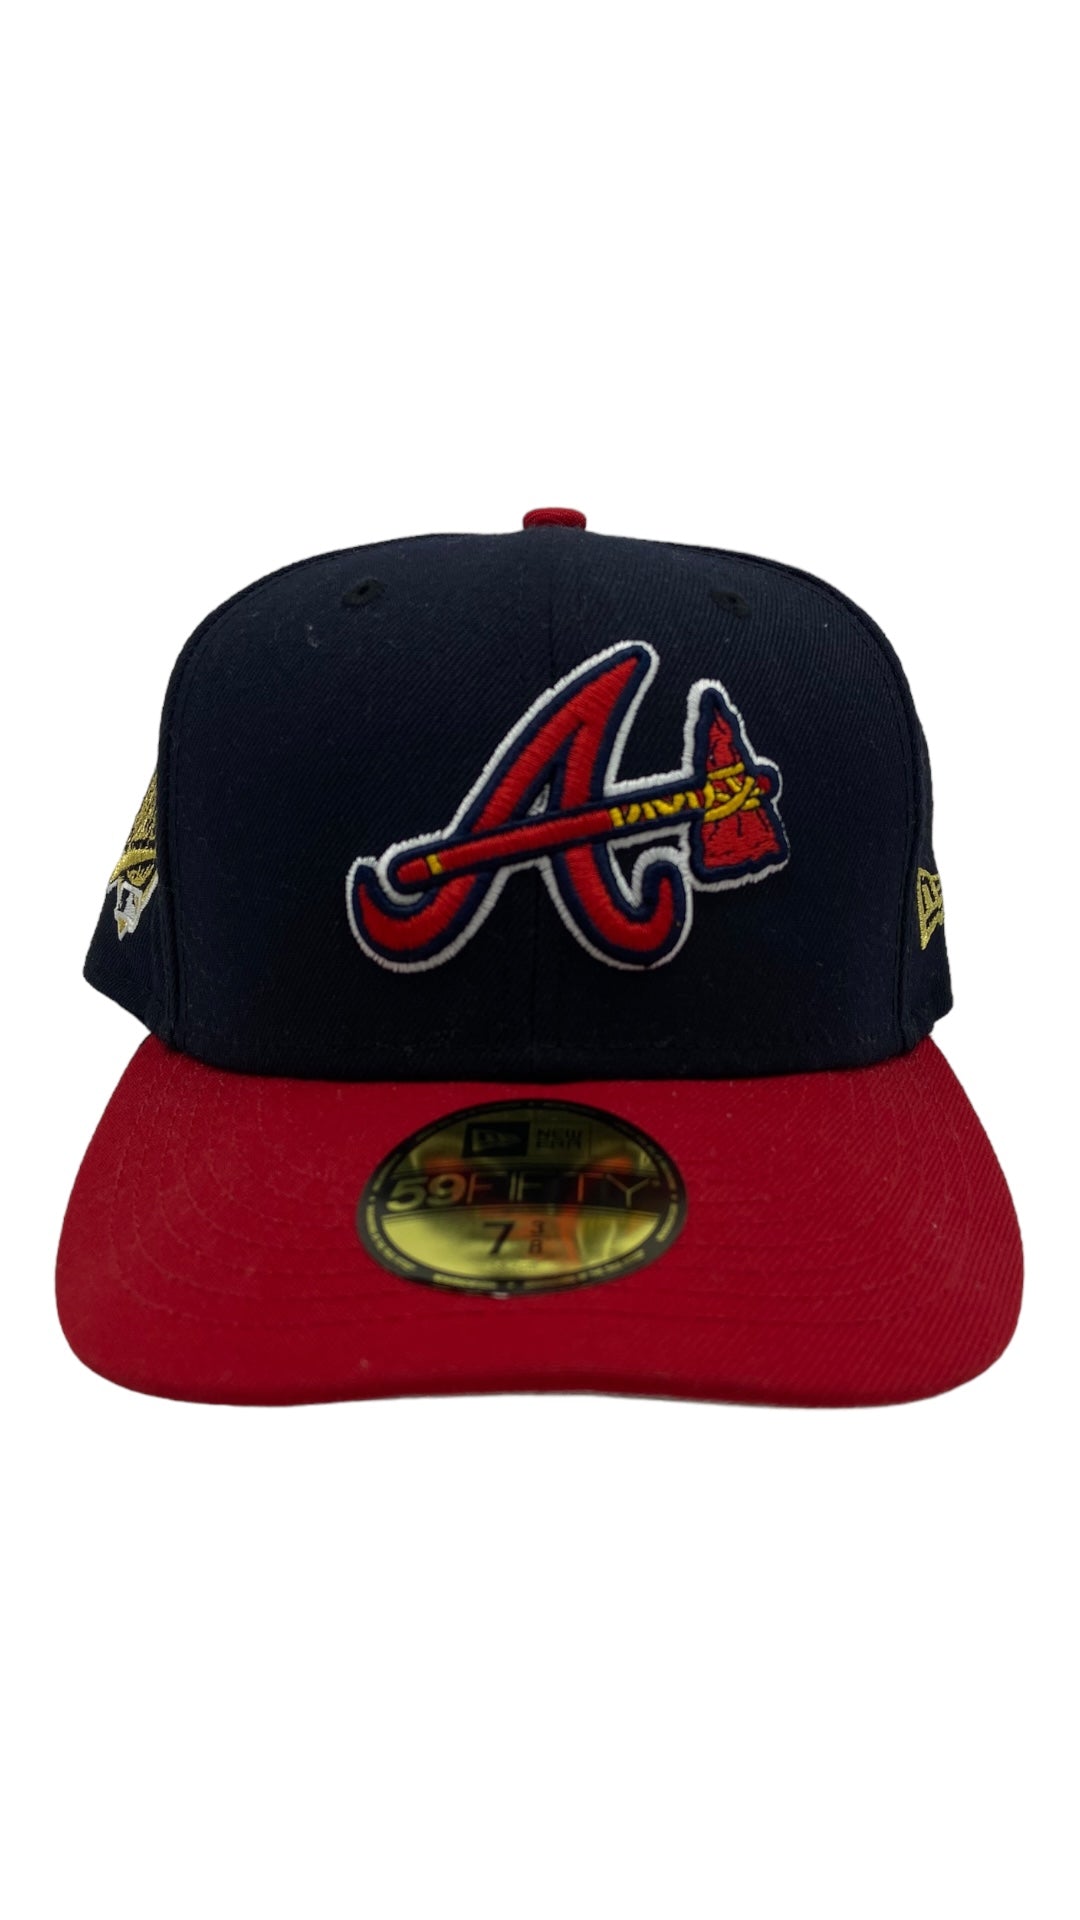 New Era Atlanta Braves Classic Navy '95 World Series Fitted Hat